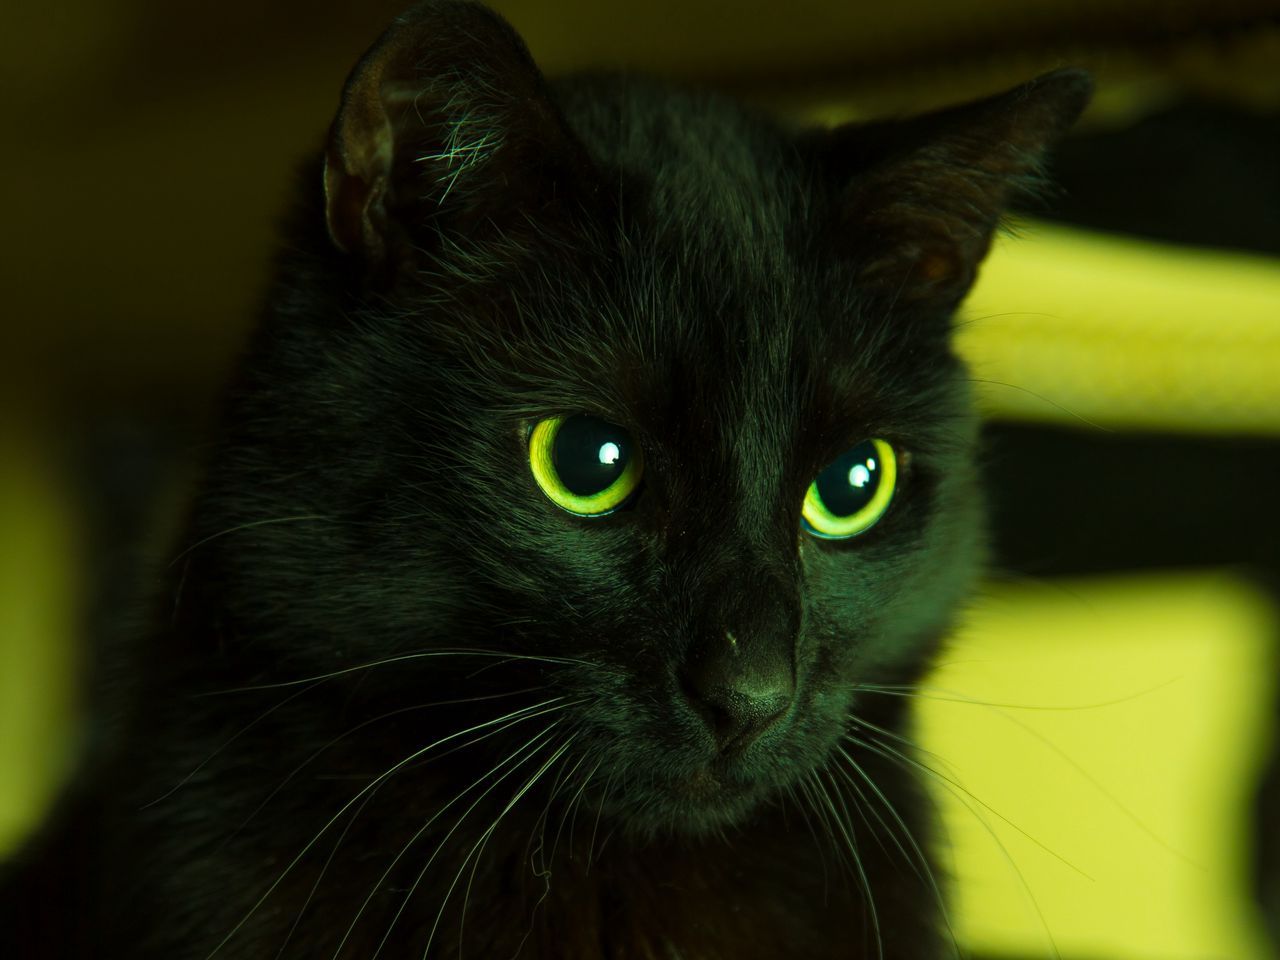 Download wallpaper 1280x960 cat, black, looks, eyes, green standard 4:3 HD background